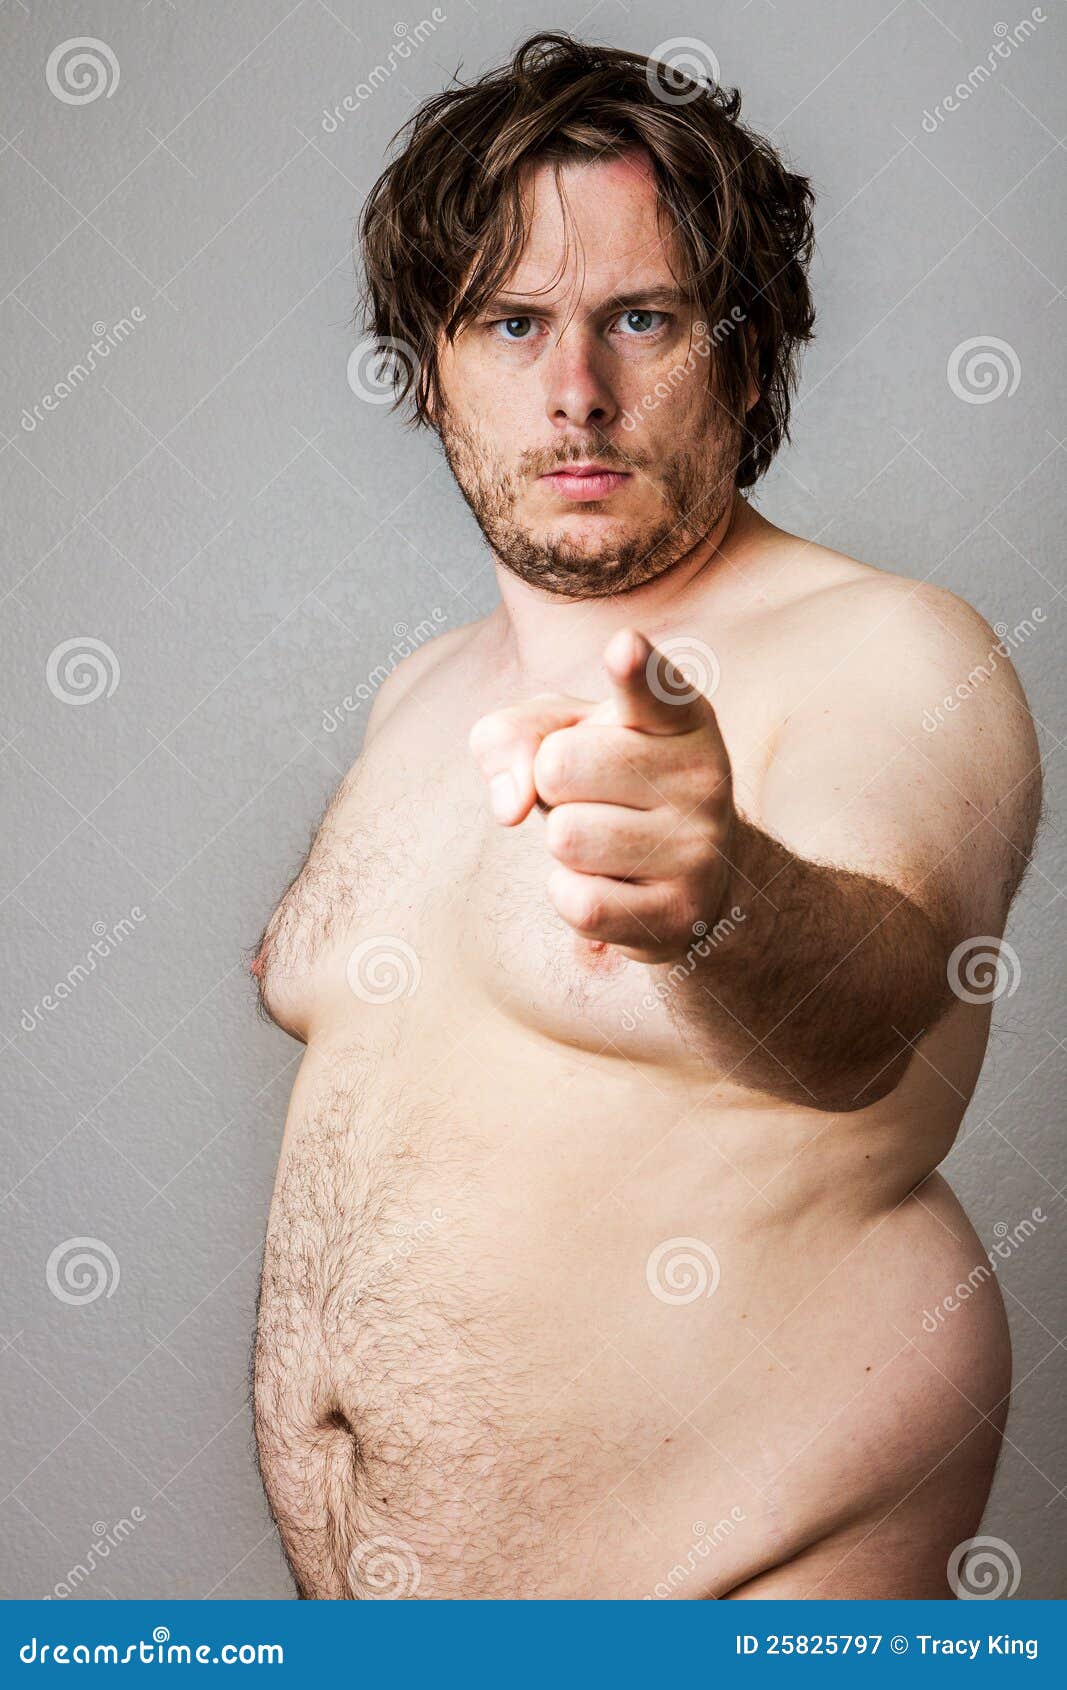 män bilder naken